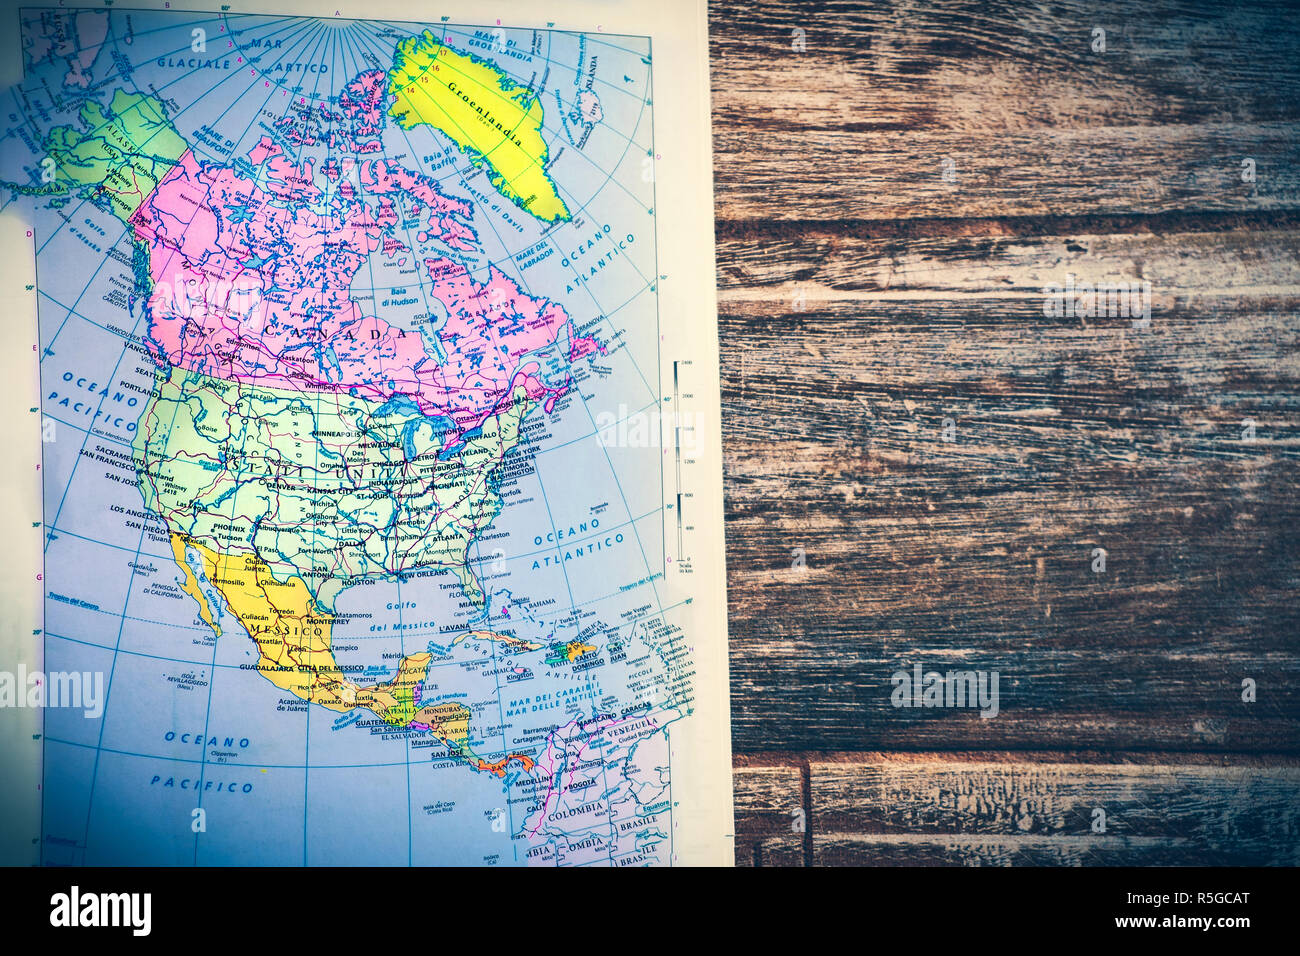 Atlas Seite Nordamerika kontinent retro Karte mit Holz vintage Hintergrund Stockfoto